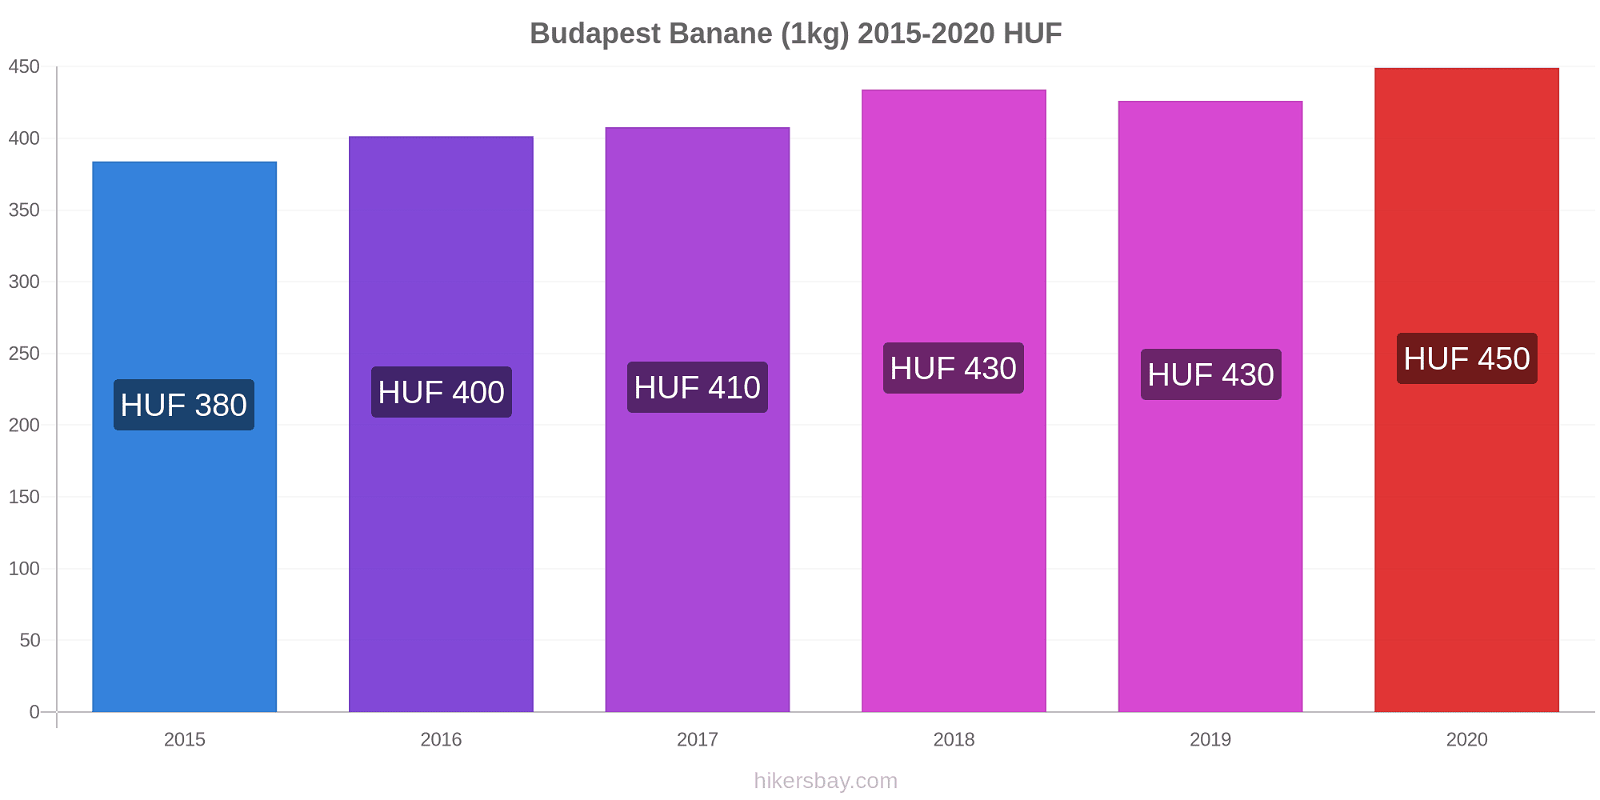 Budapest variazioni di prezzo Banana (1kg) hikersbay.com